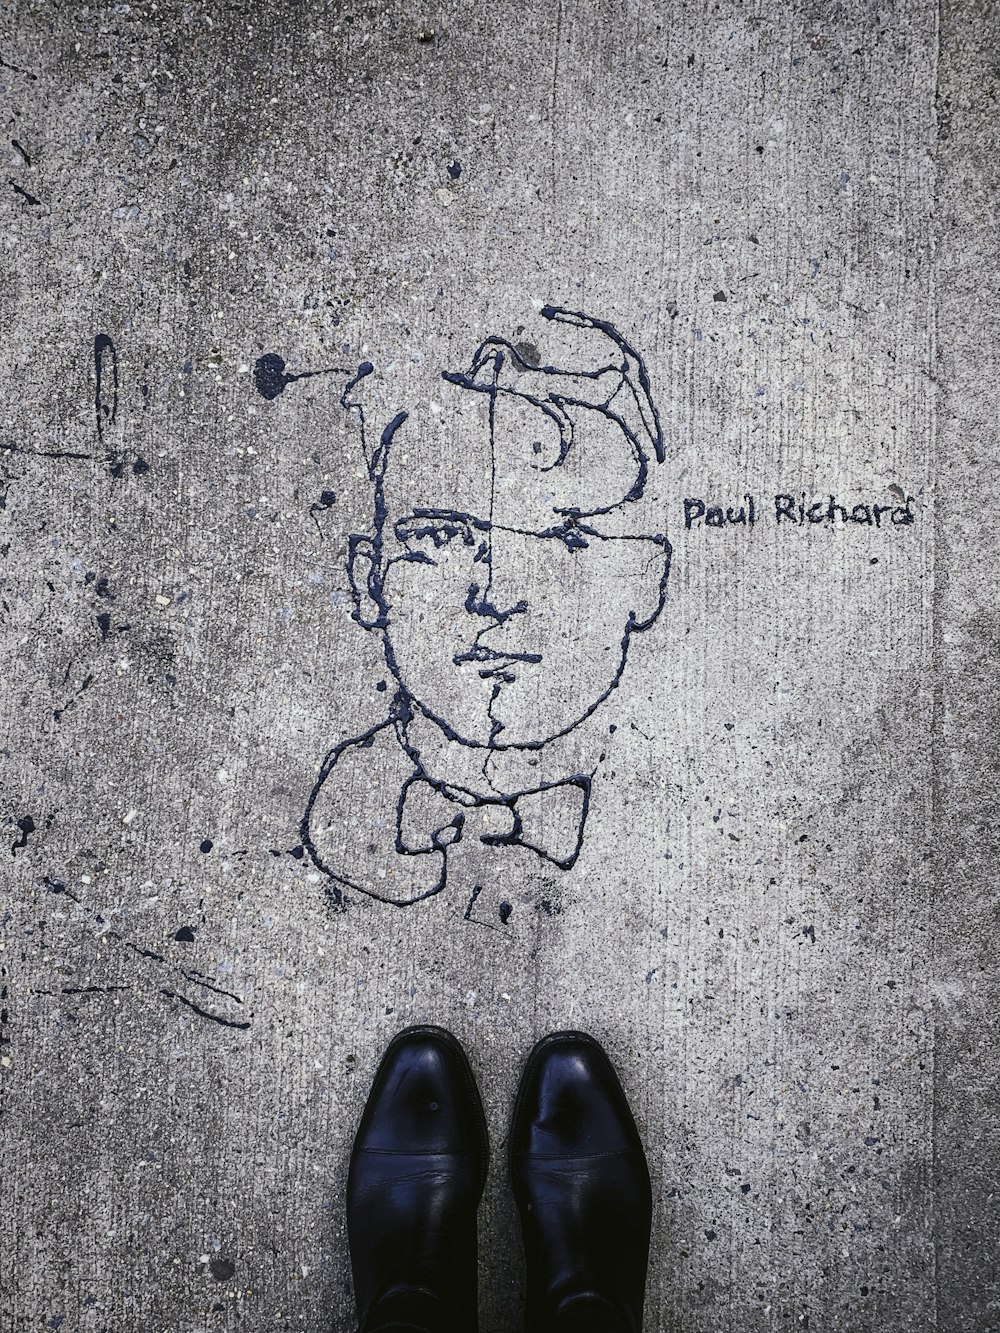 person standing near Paul Richard sketch